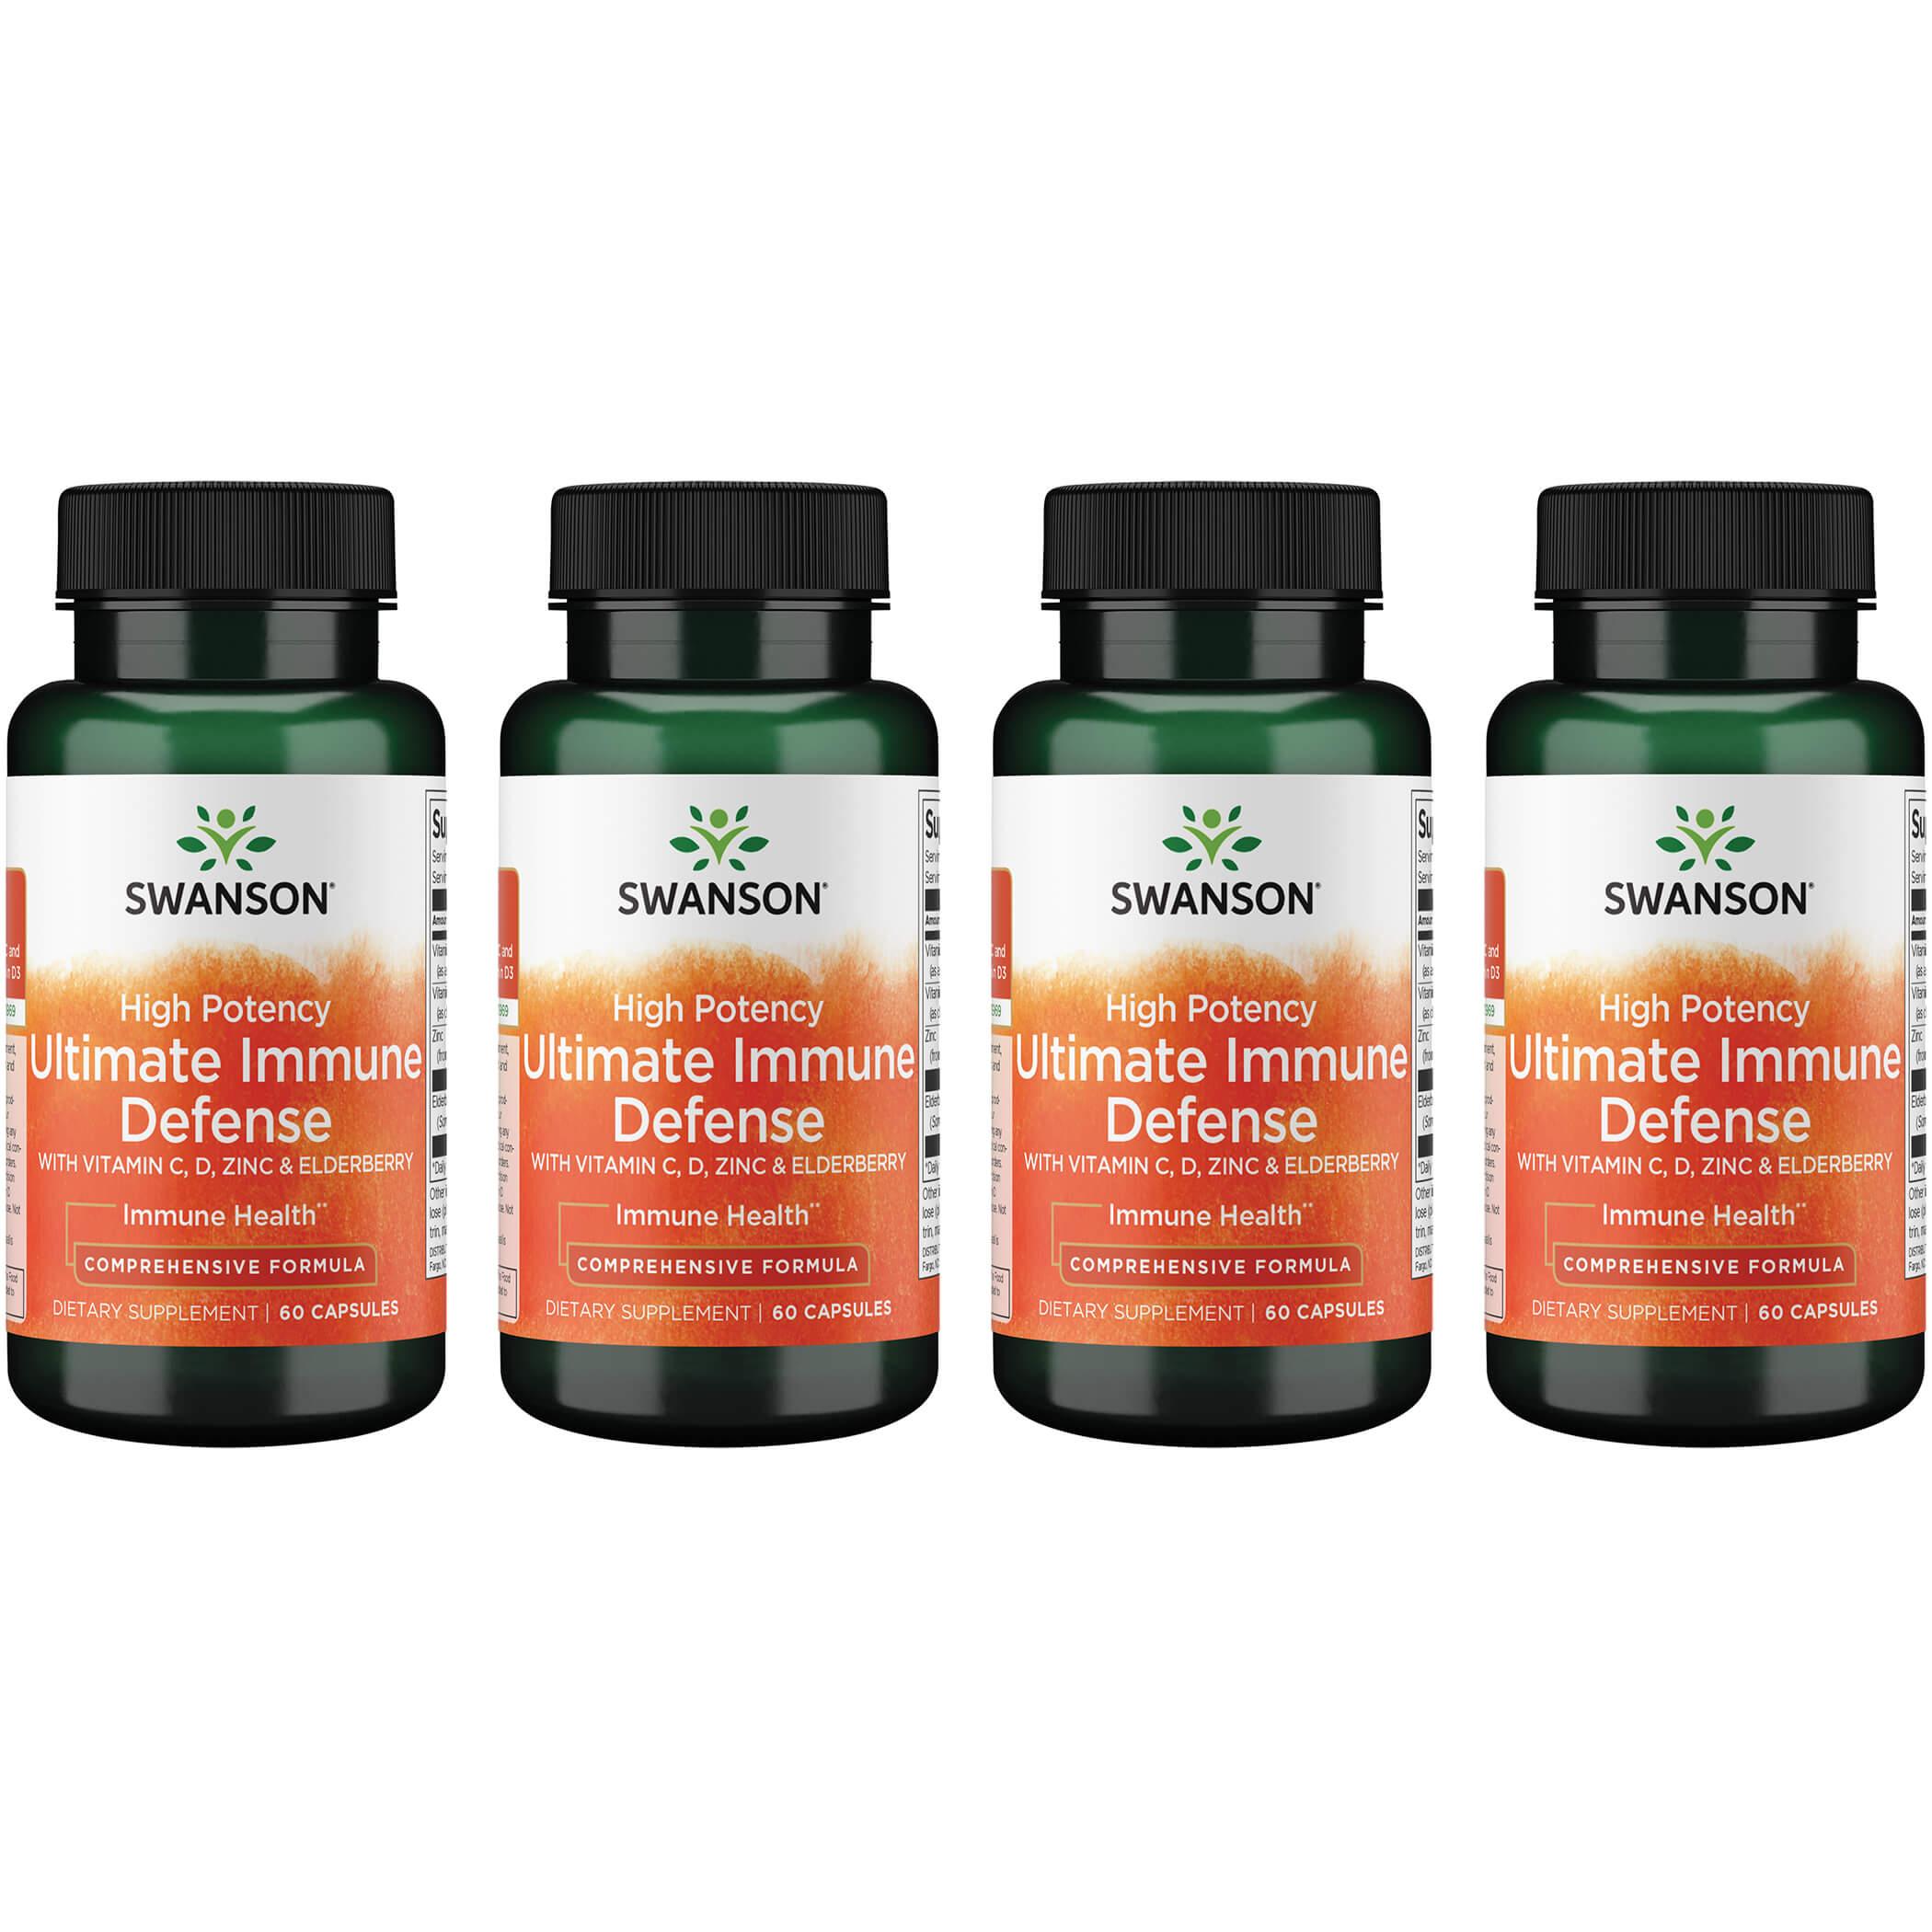 Swanson Premium High Potency Ultimate Immune Defense with C, D, Zinc & Elderberry 4 Pack Vitamin 60 Caps